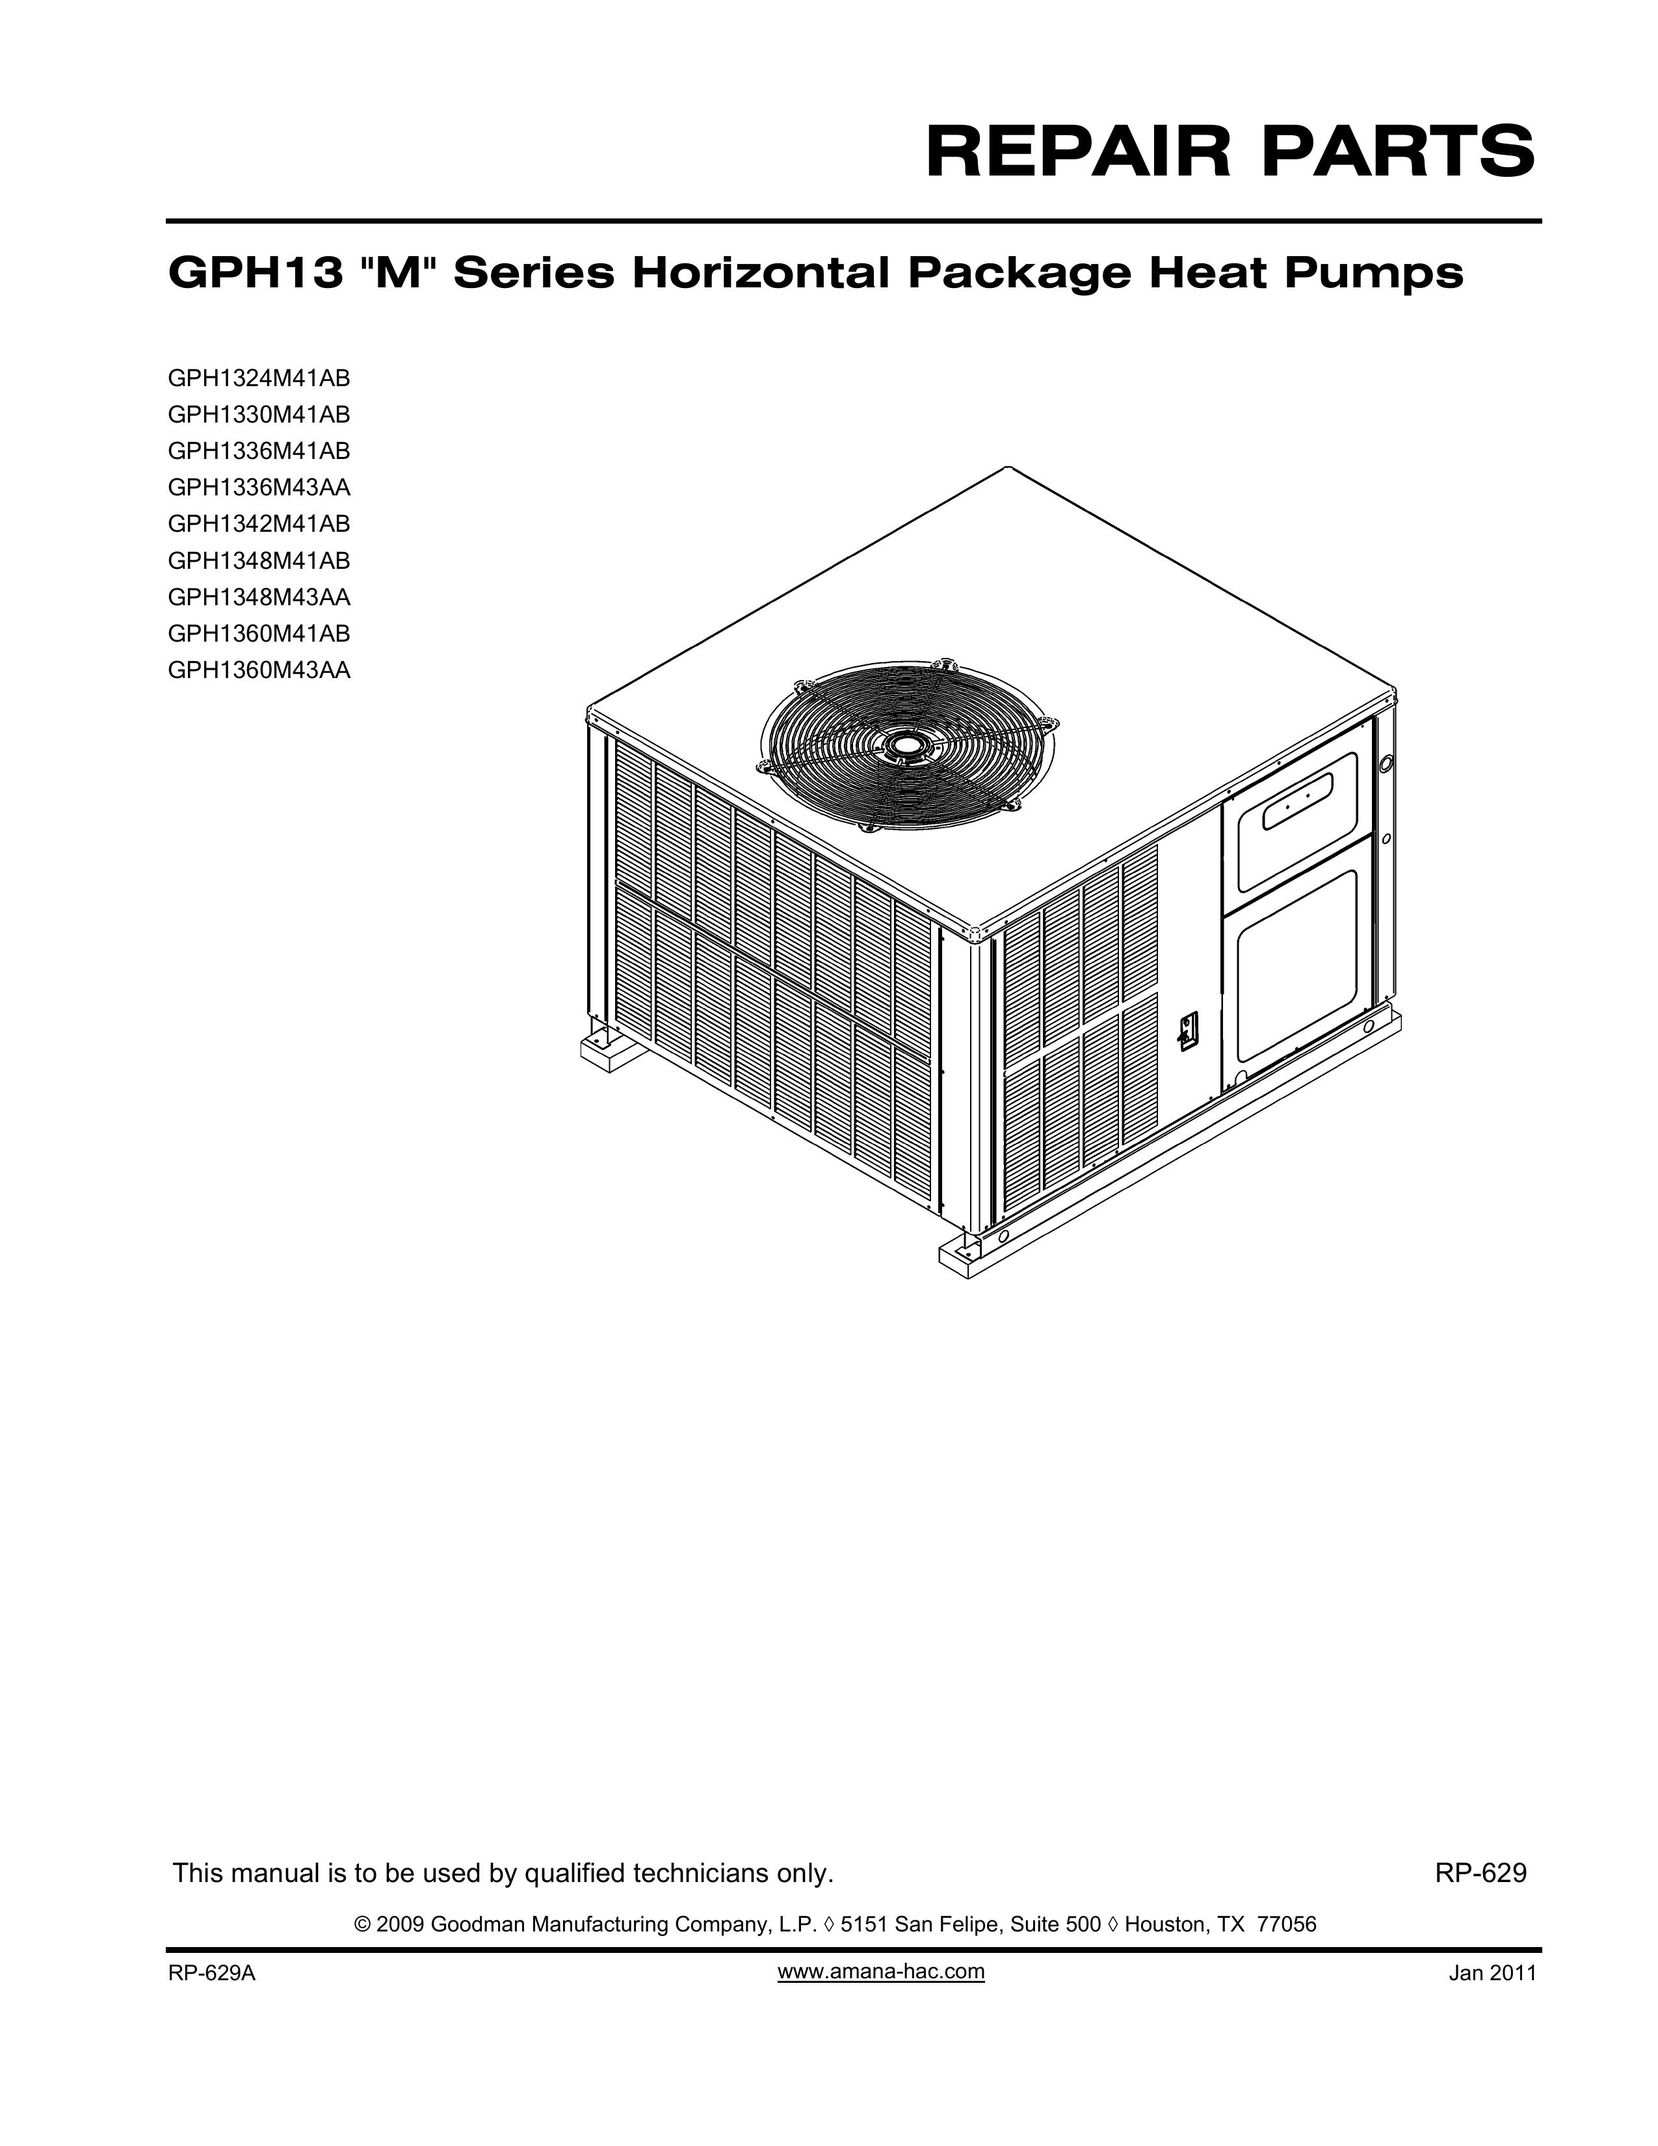 Goodman Mfg GPH1336M43AA Heat Pump User Manual